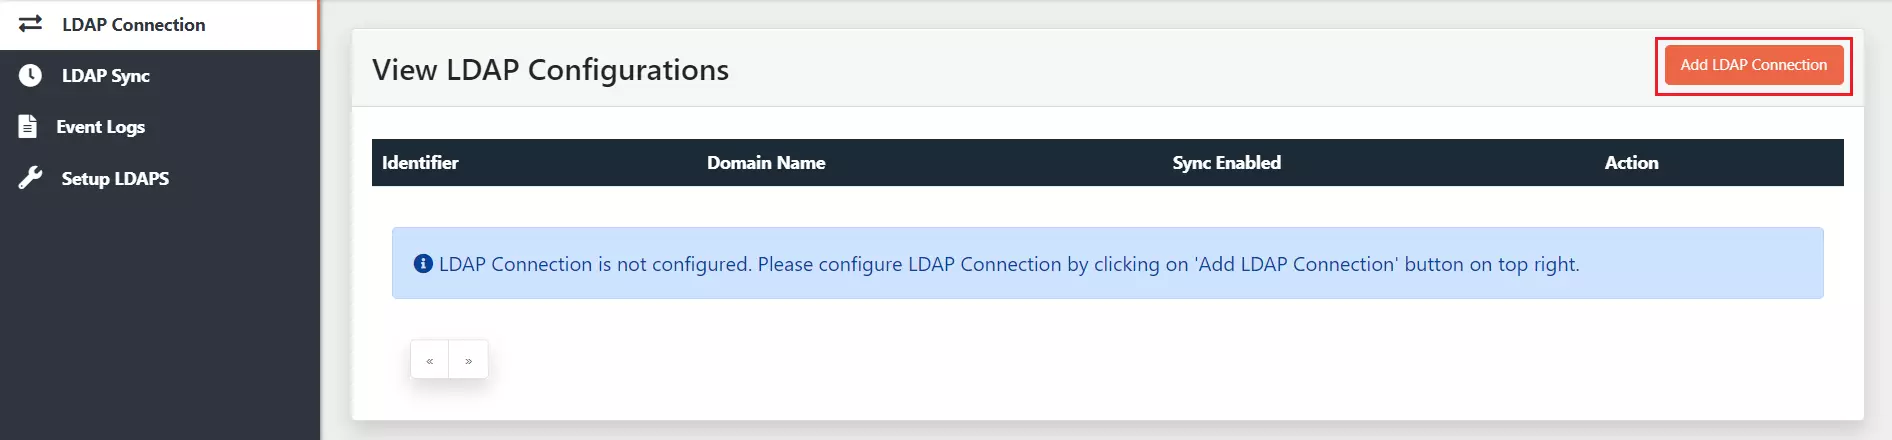 miniorange ldap gateway add ldap configuration